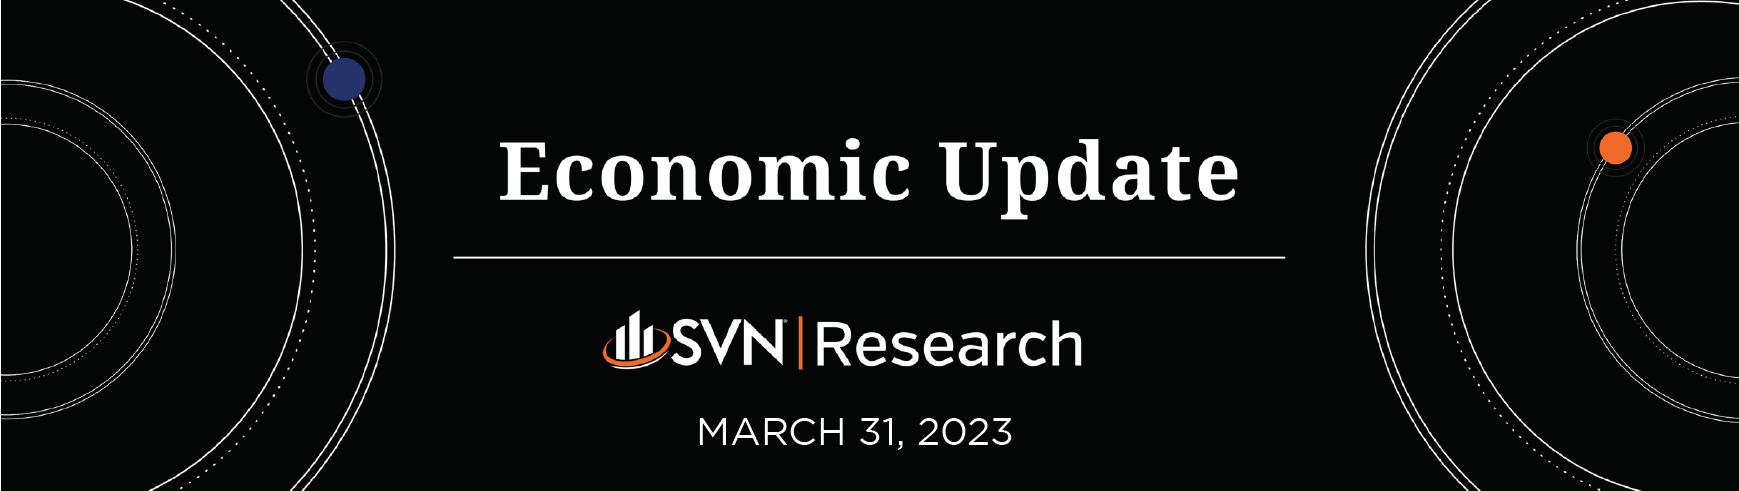 SVN | Research Economic Update 03.31.2023